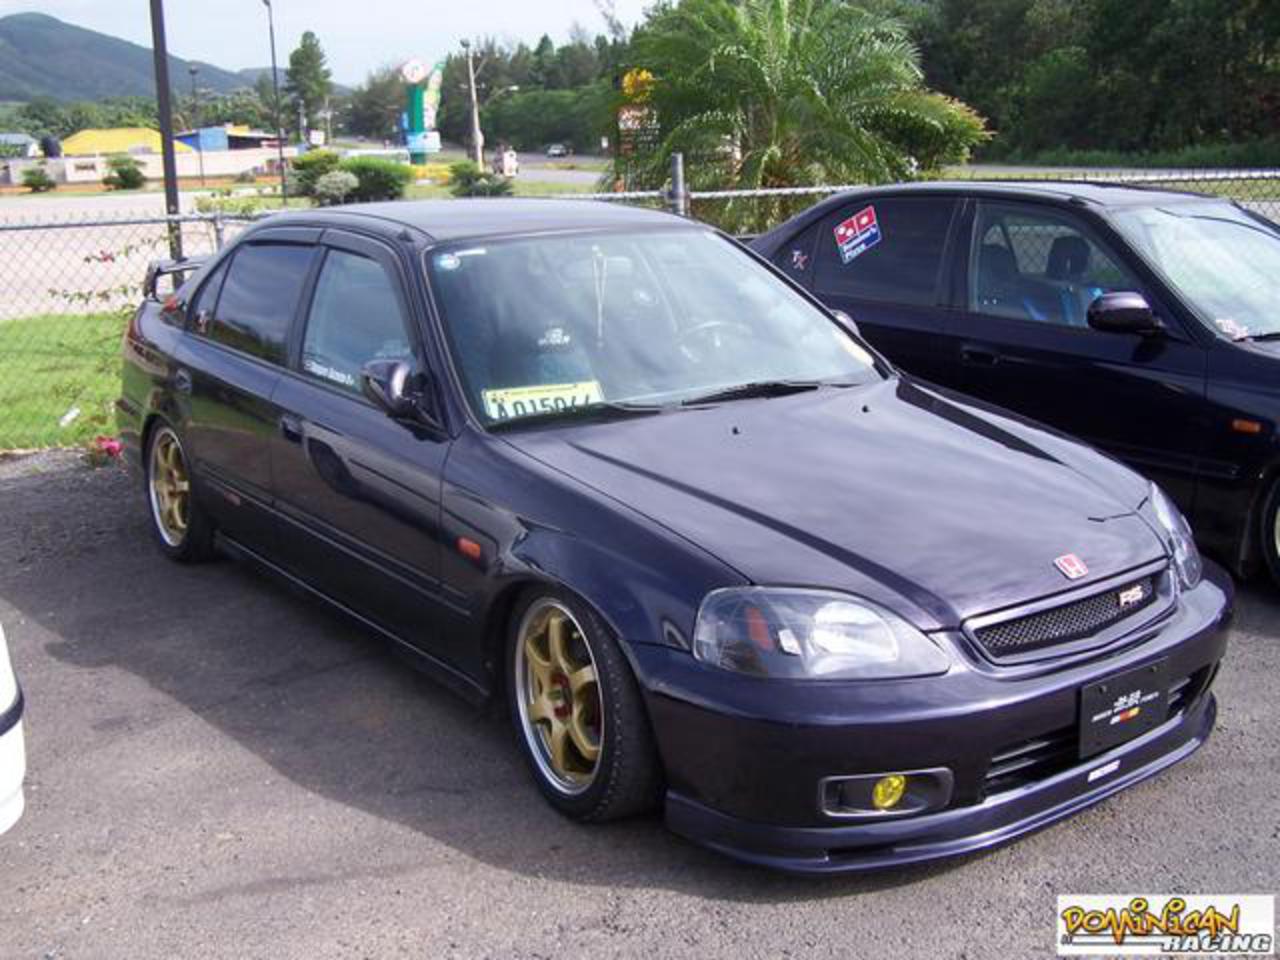 Vi rs. Honda Civic vi RS. Хонда Цивик vi RS 1999. Honda Civic 6 седан. Honda Civic 6 седан 2000.